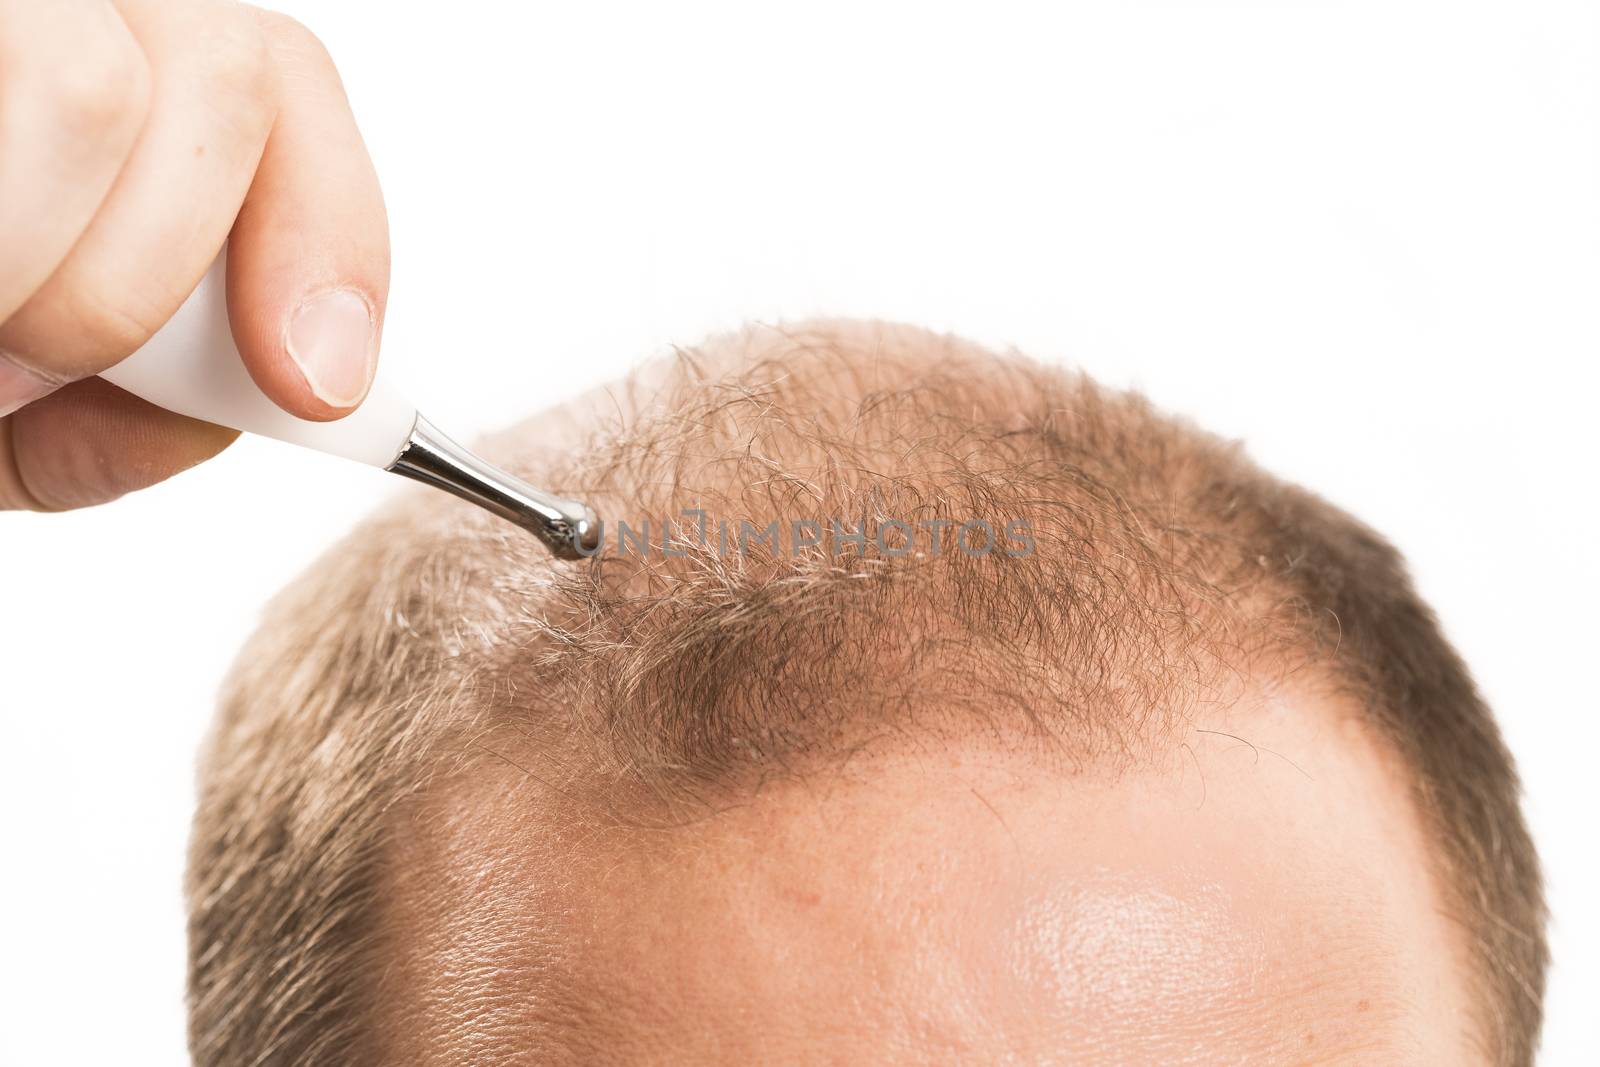 Baldness Alopecia man hair loss medicine bald treatment transplantation France